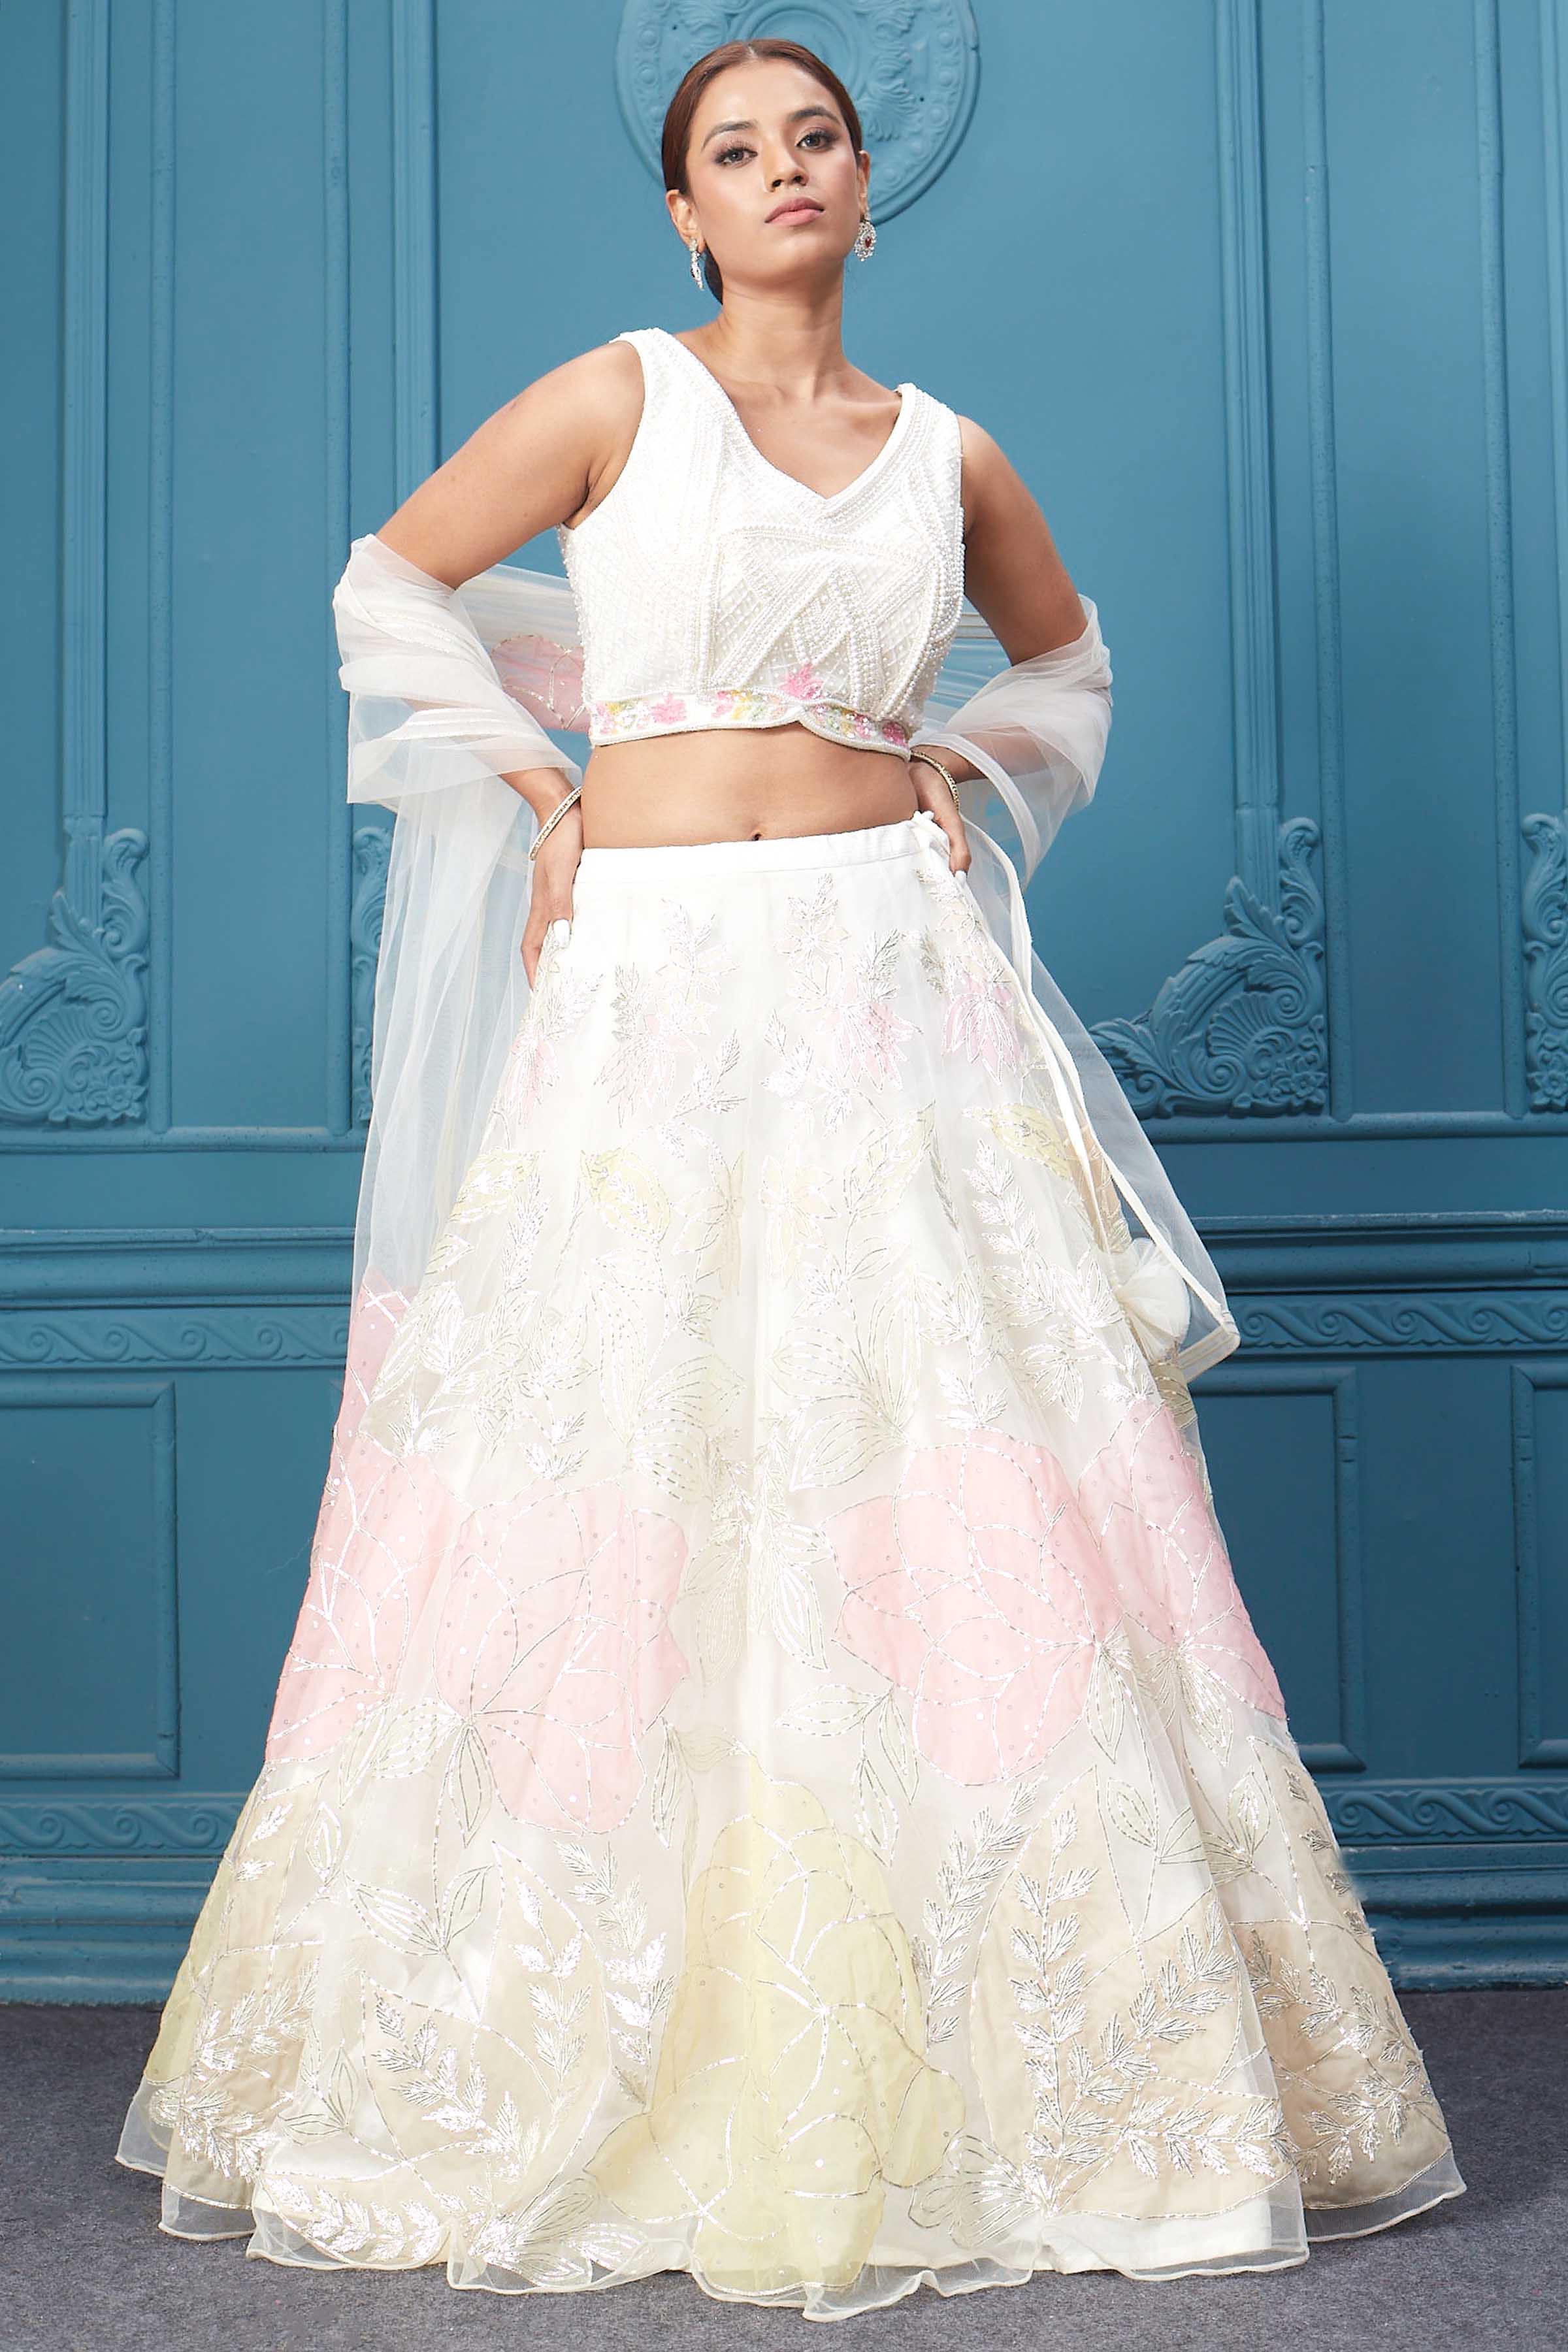 Pink Color Sleeveless Blouse Bandhani Style Lehenga With Heavy Embroidery  Work